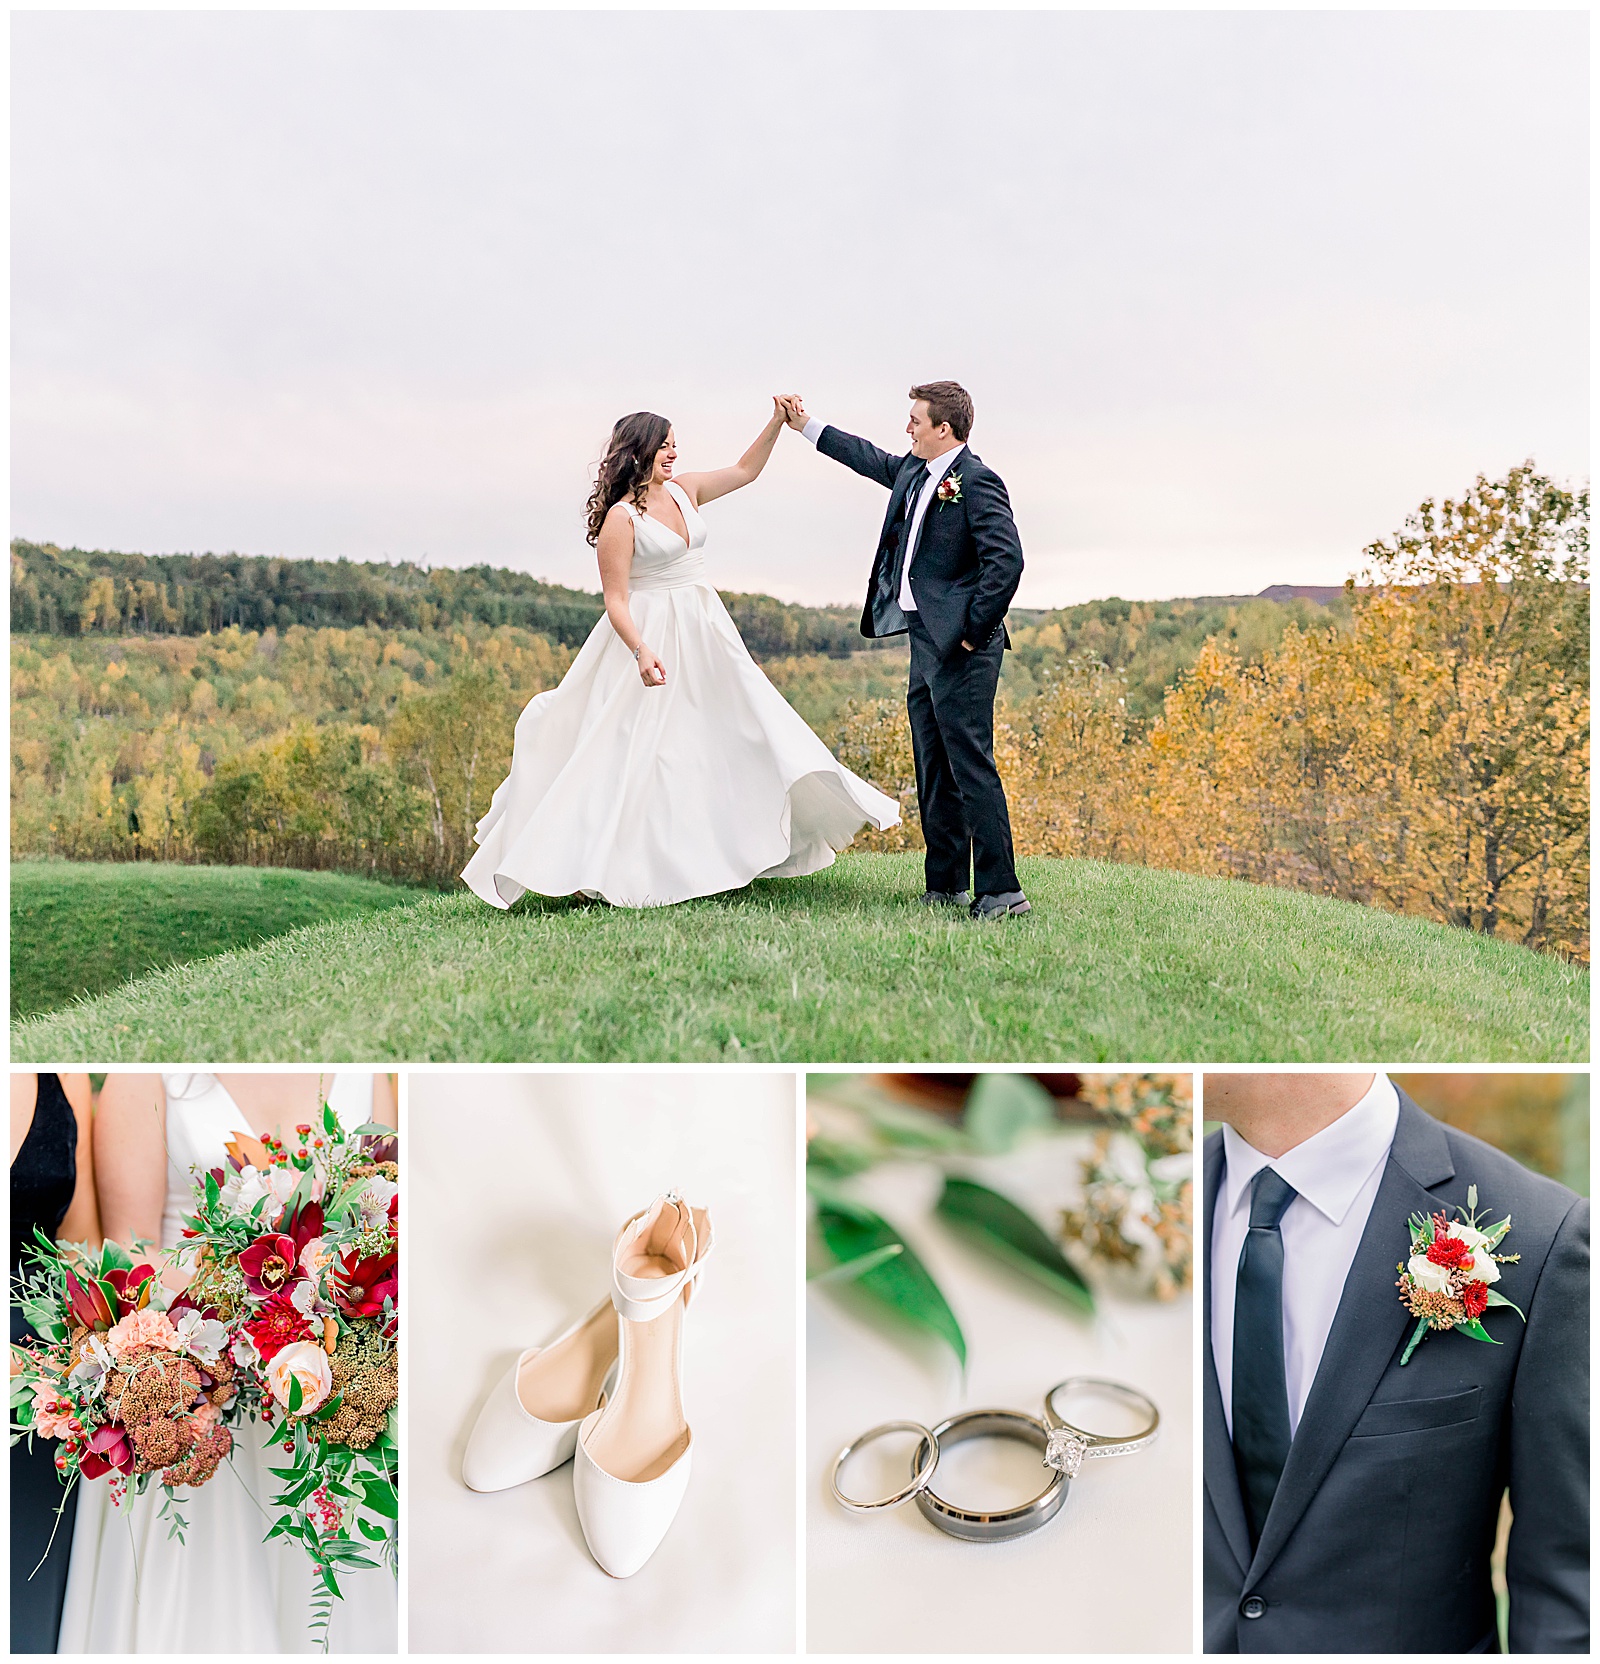 Minnesota Discovery Center Wedding - Stephanie Holsman Photography